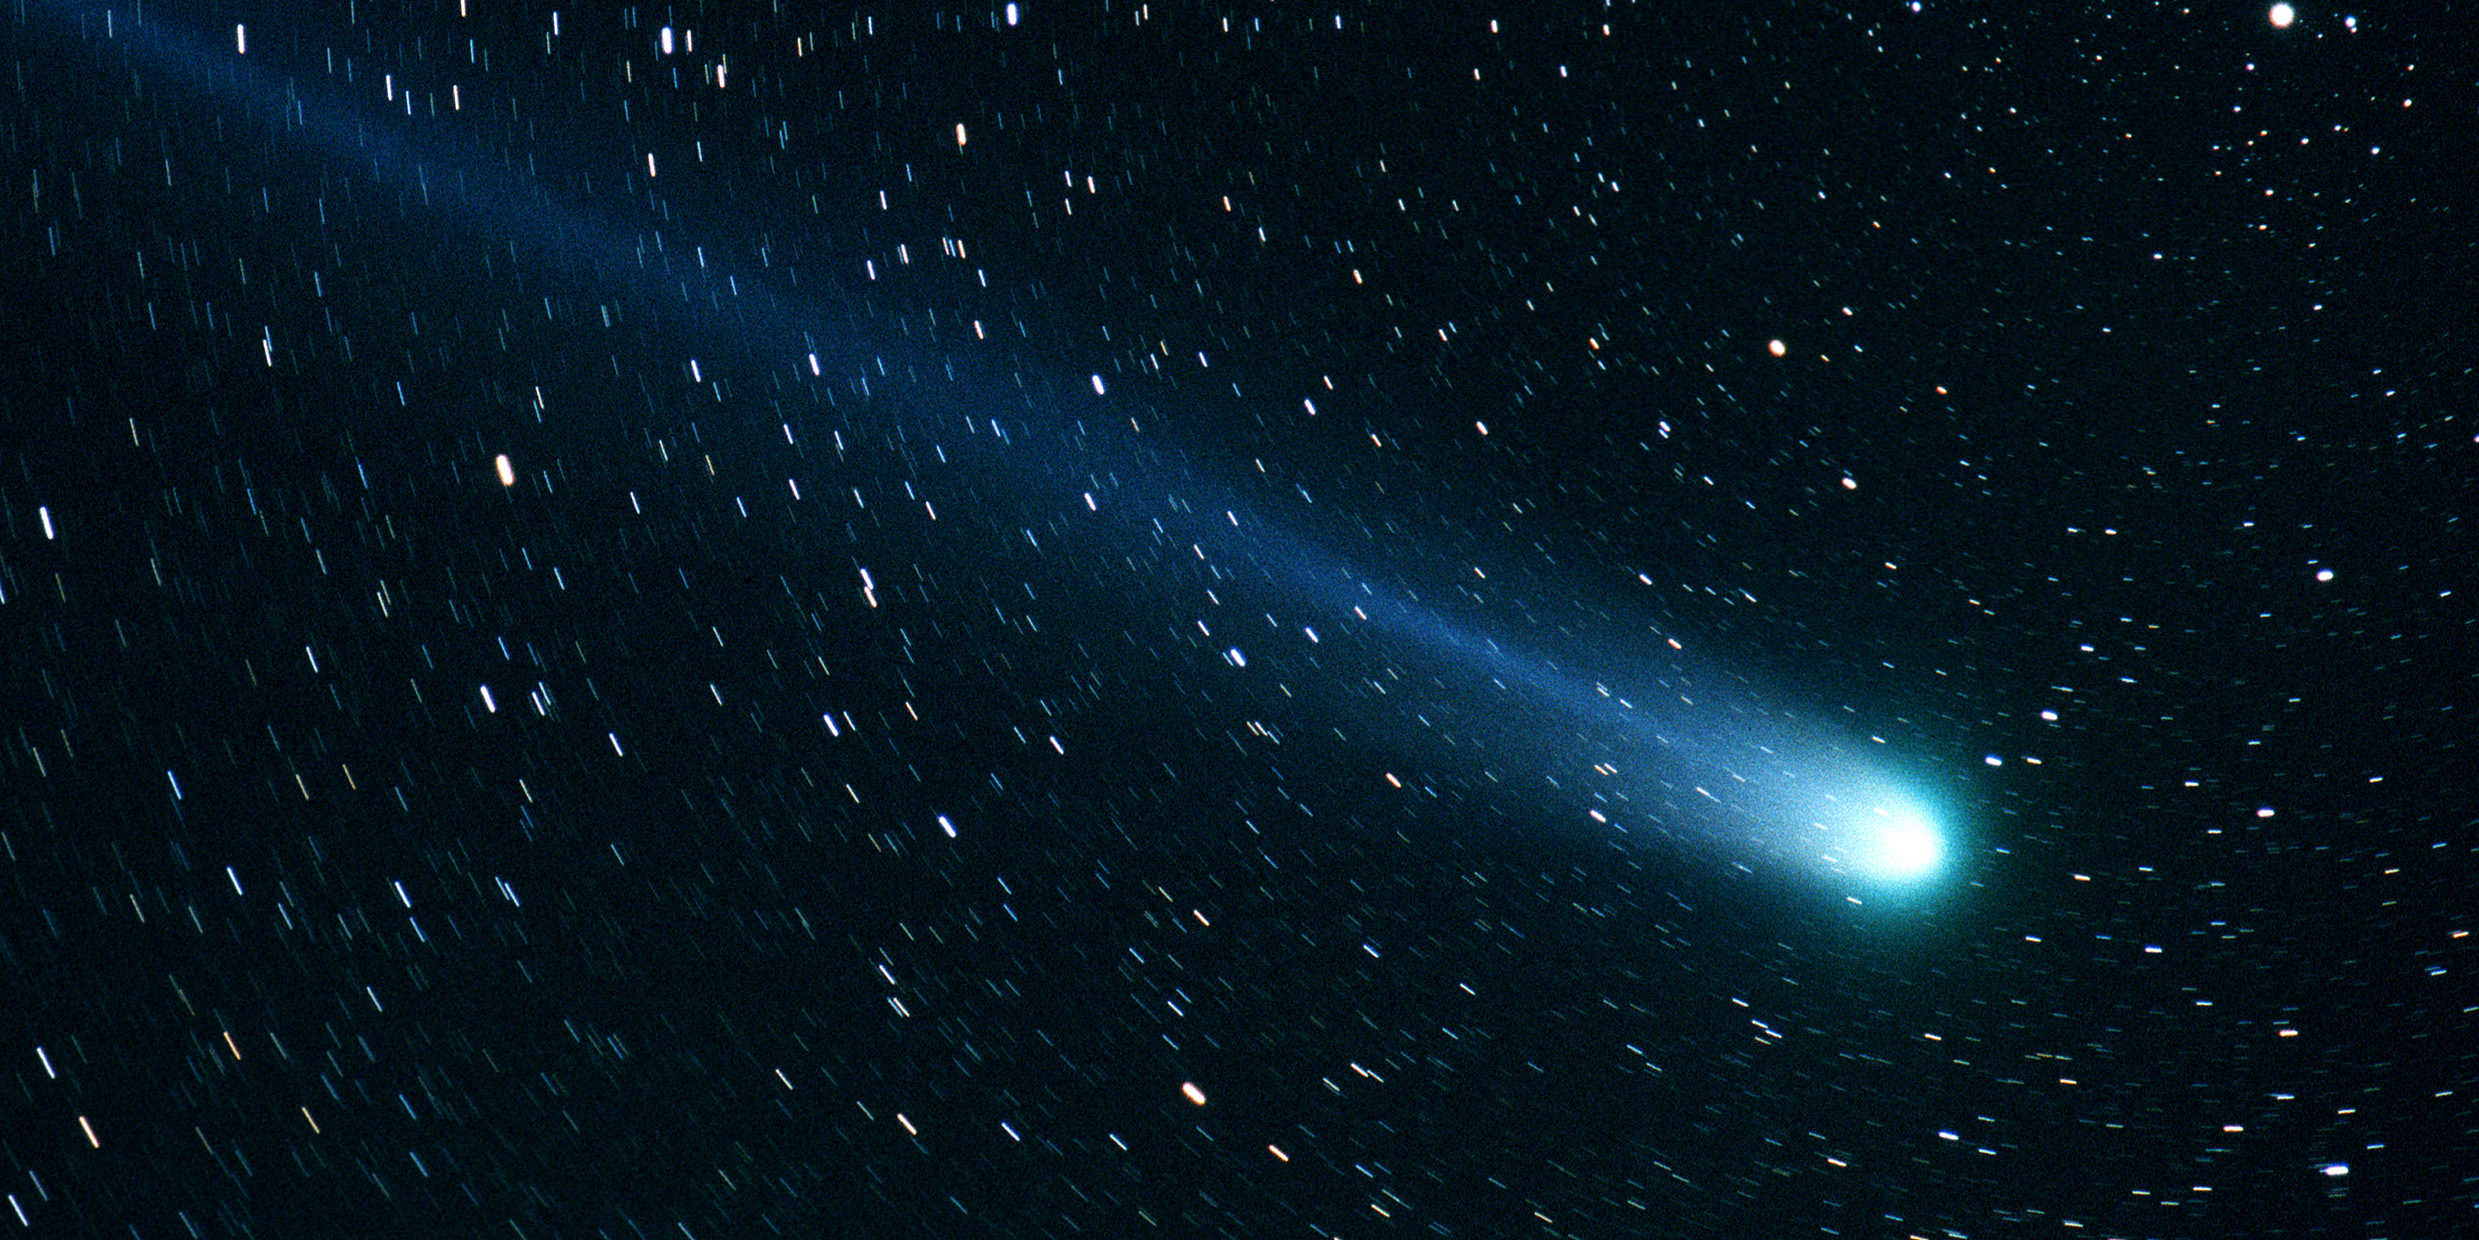 Astronomical image of Comet Hyakutake